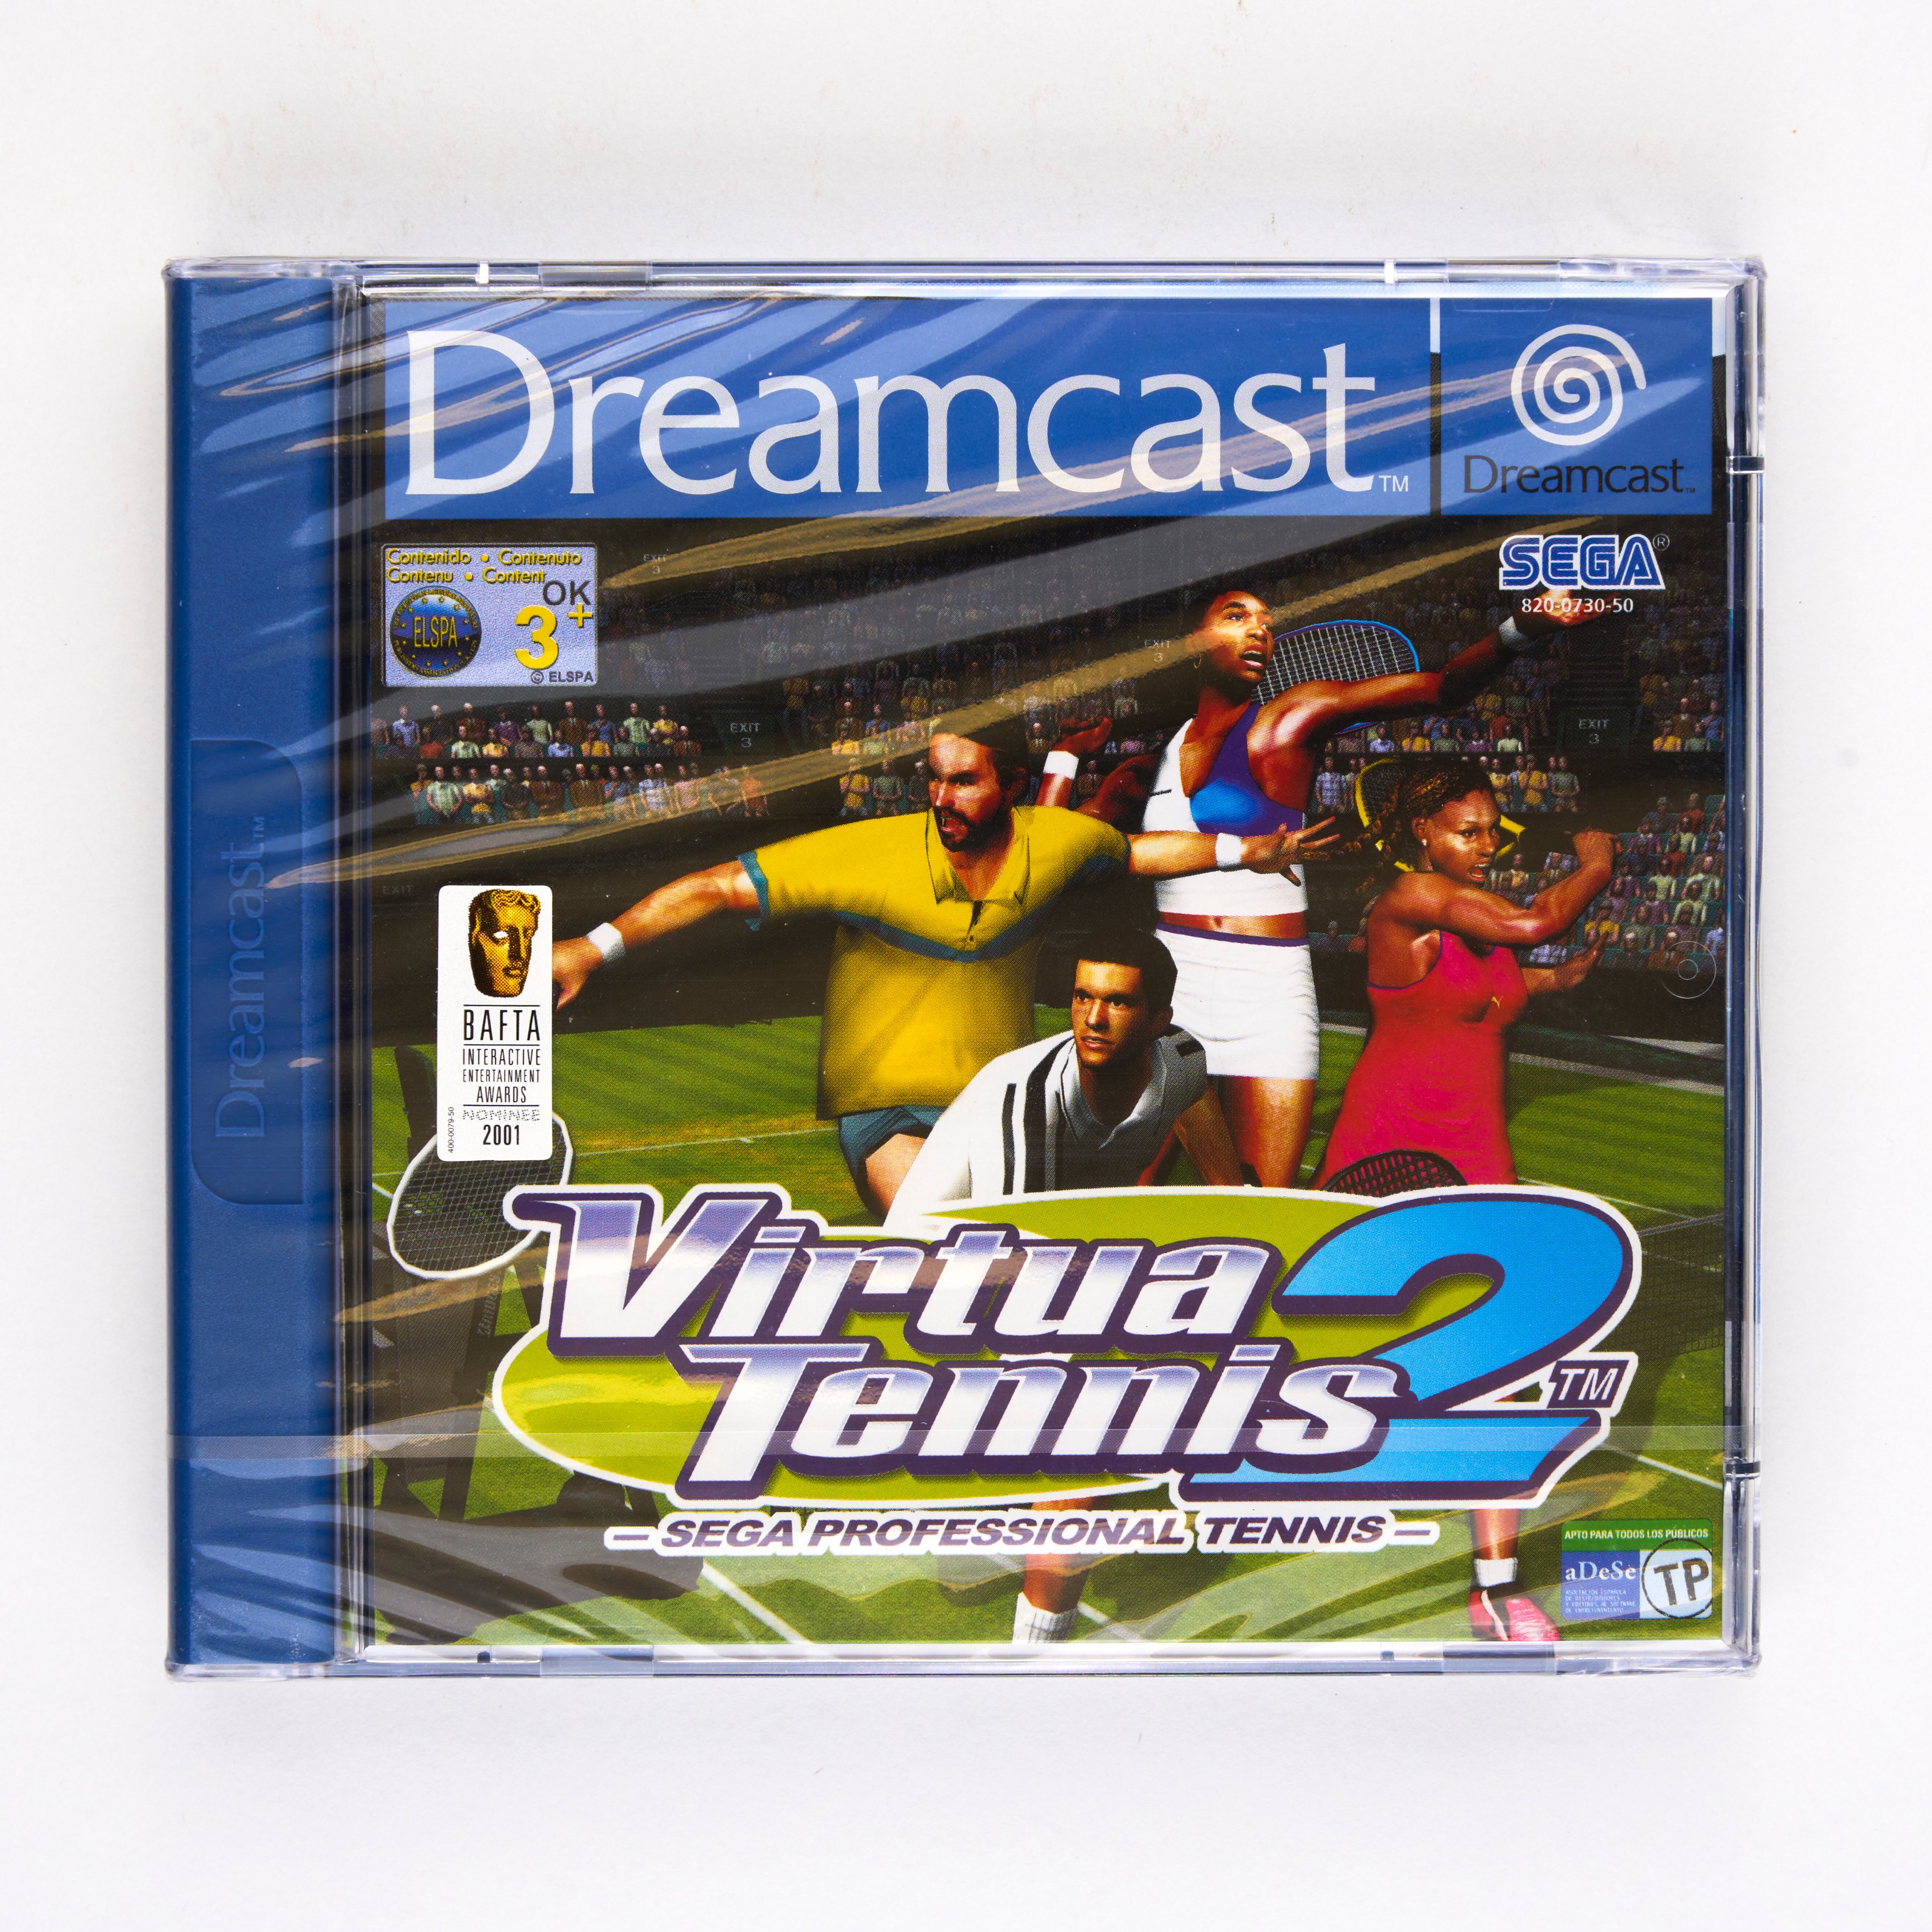 SEGA - Virtua Tennis 2 - Dreamcast - Sealed